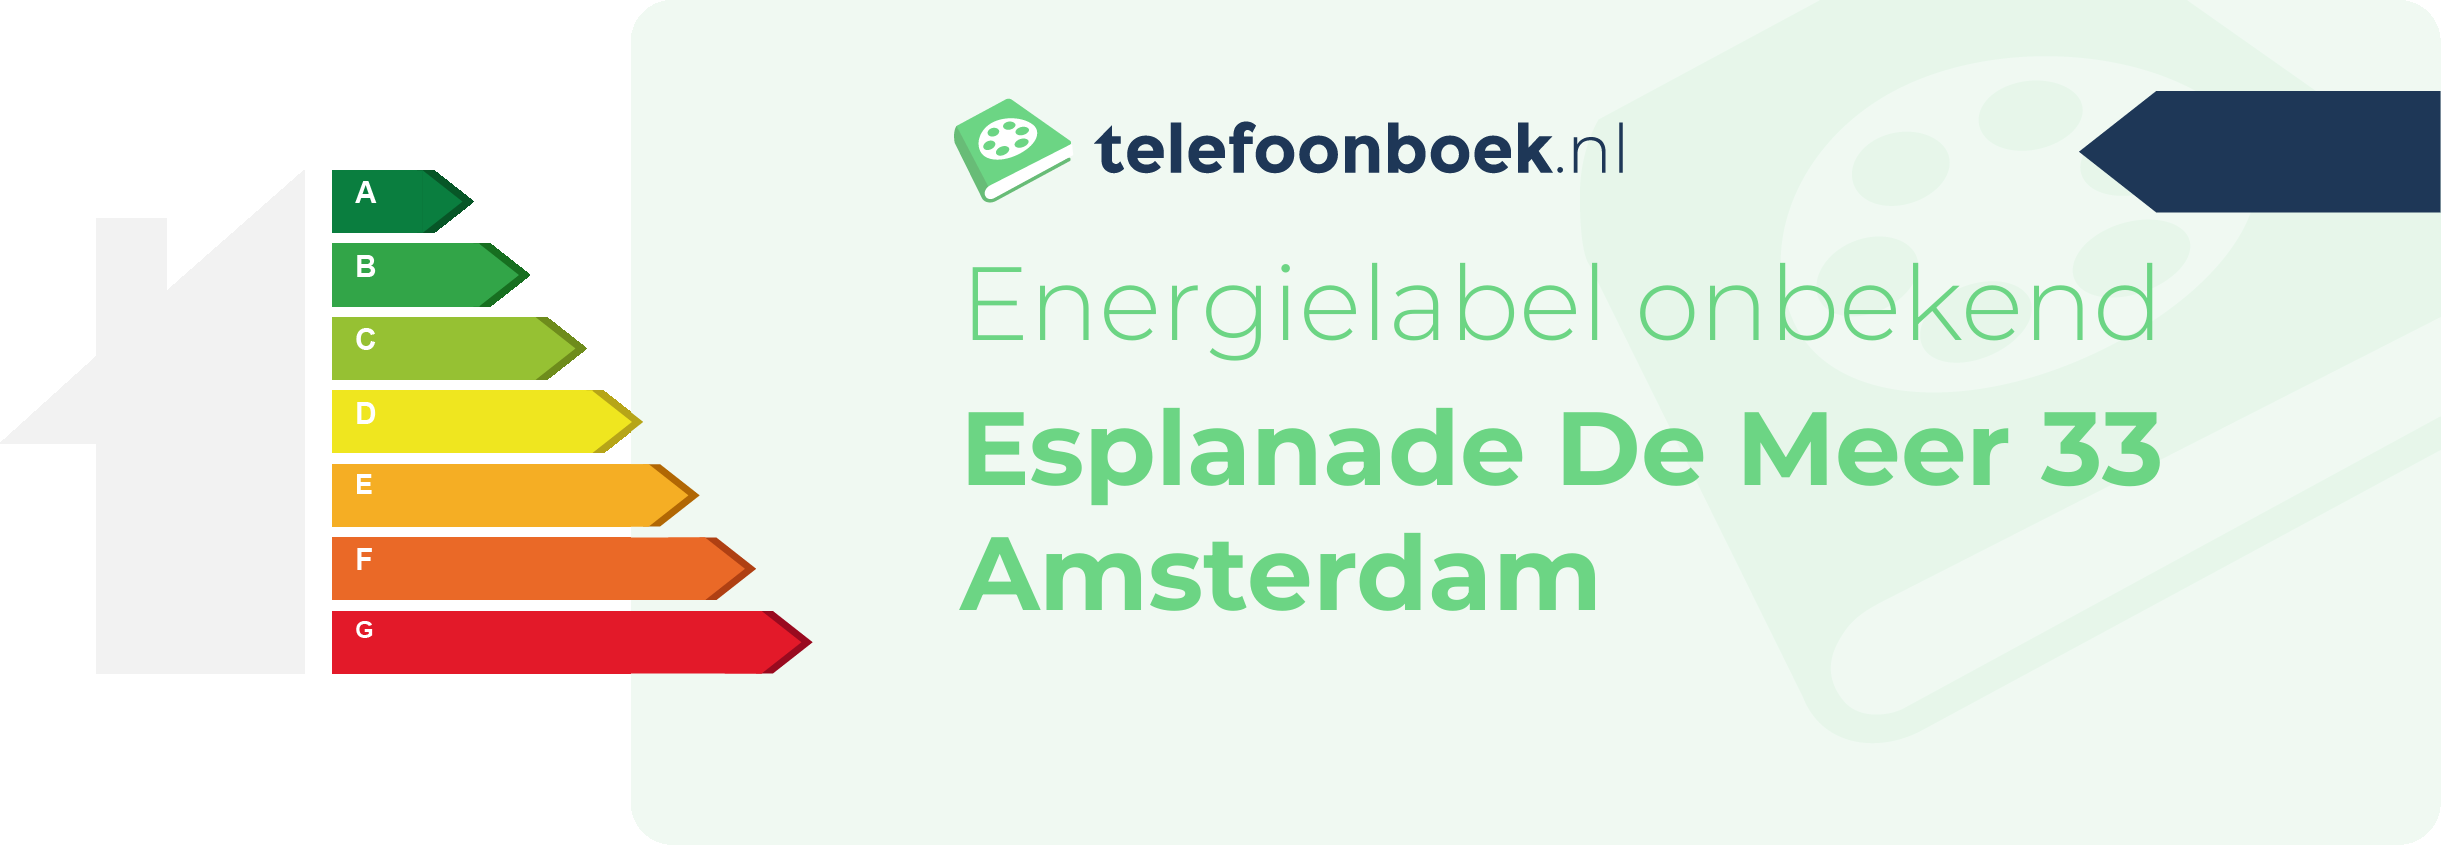 Energielabel Esplanade De Meer 33 Amsterdam